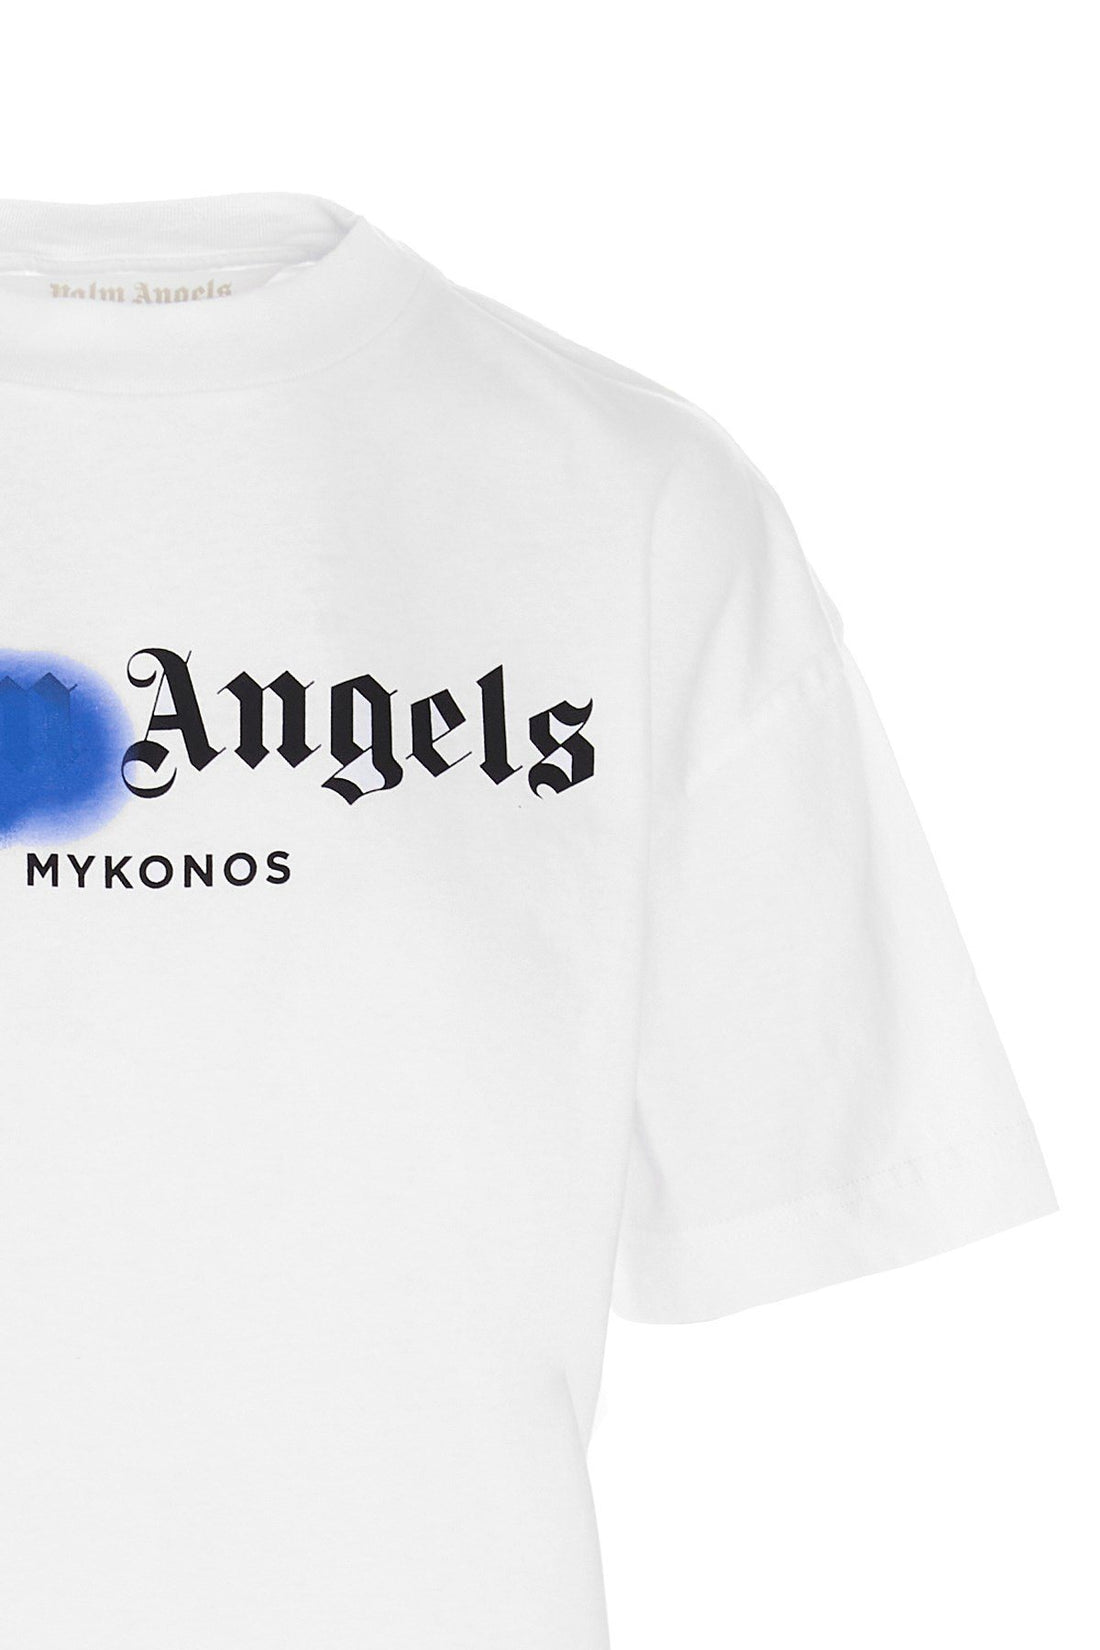 PALM ANGELS WOMEN Mykonos Sprayed T-Shirt White - MAISONDEFASHION.COM